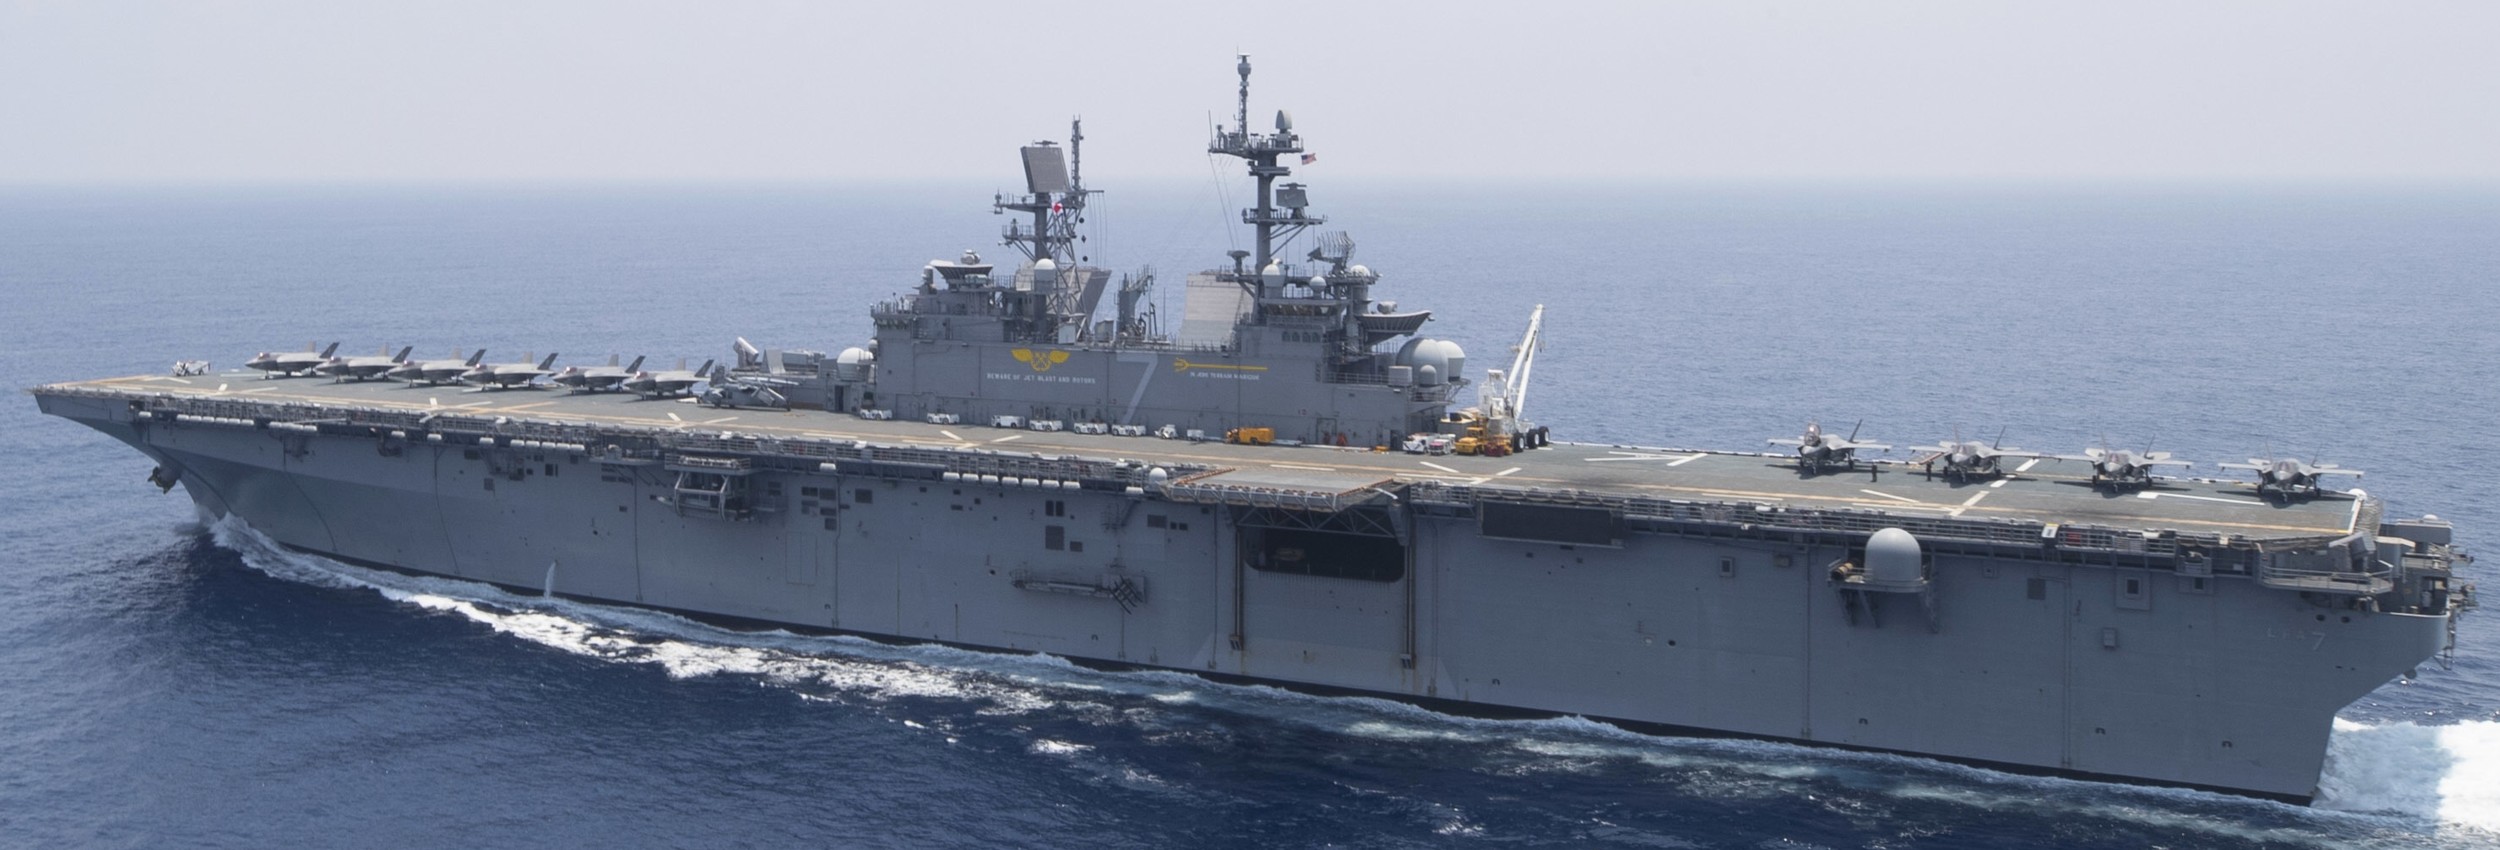 lha-7 uss tripoli america class amphibious assault ship landing us navy marines vmfa-121 f-35b lightning ii 59